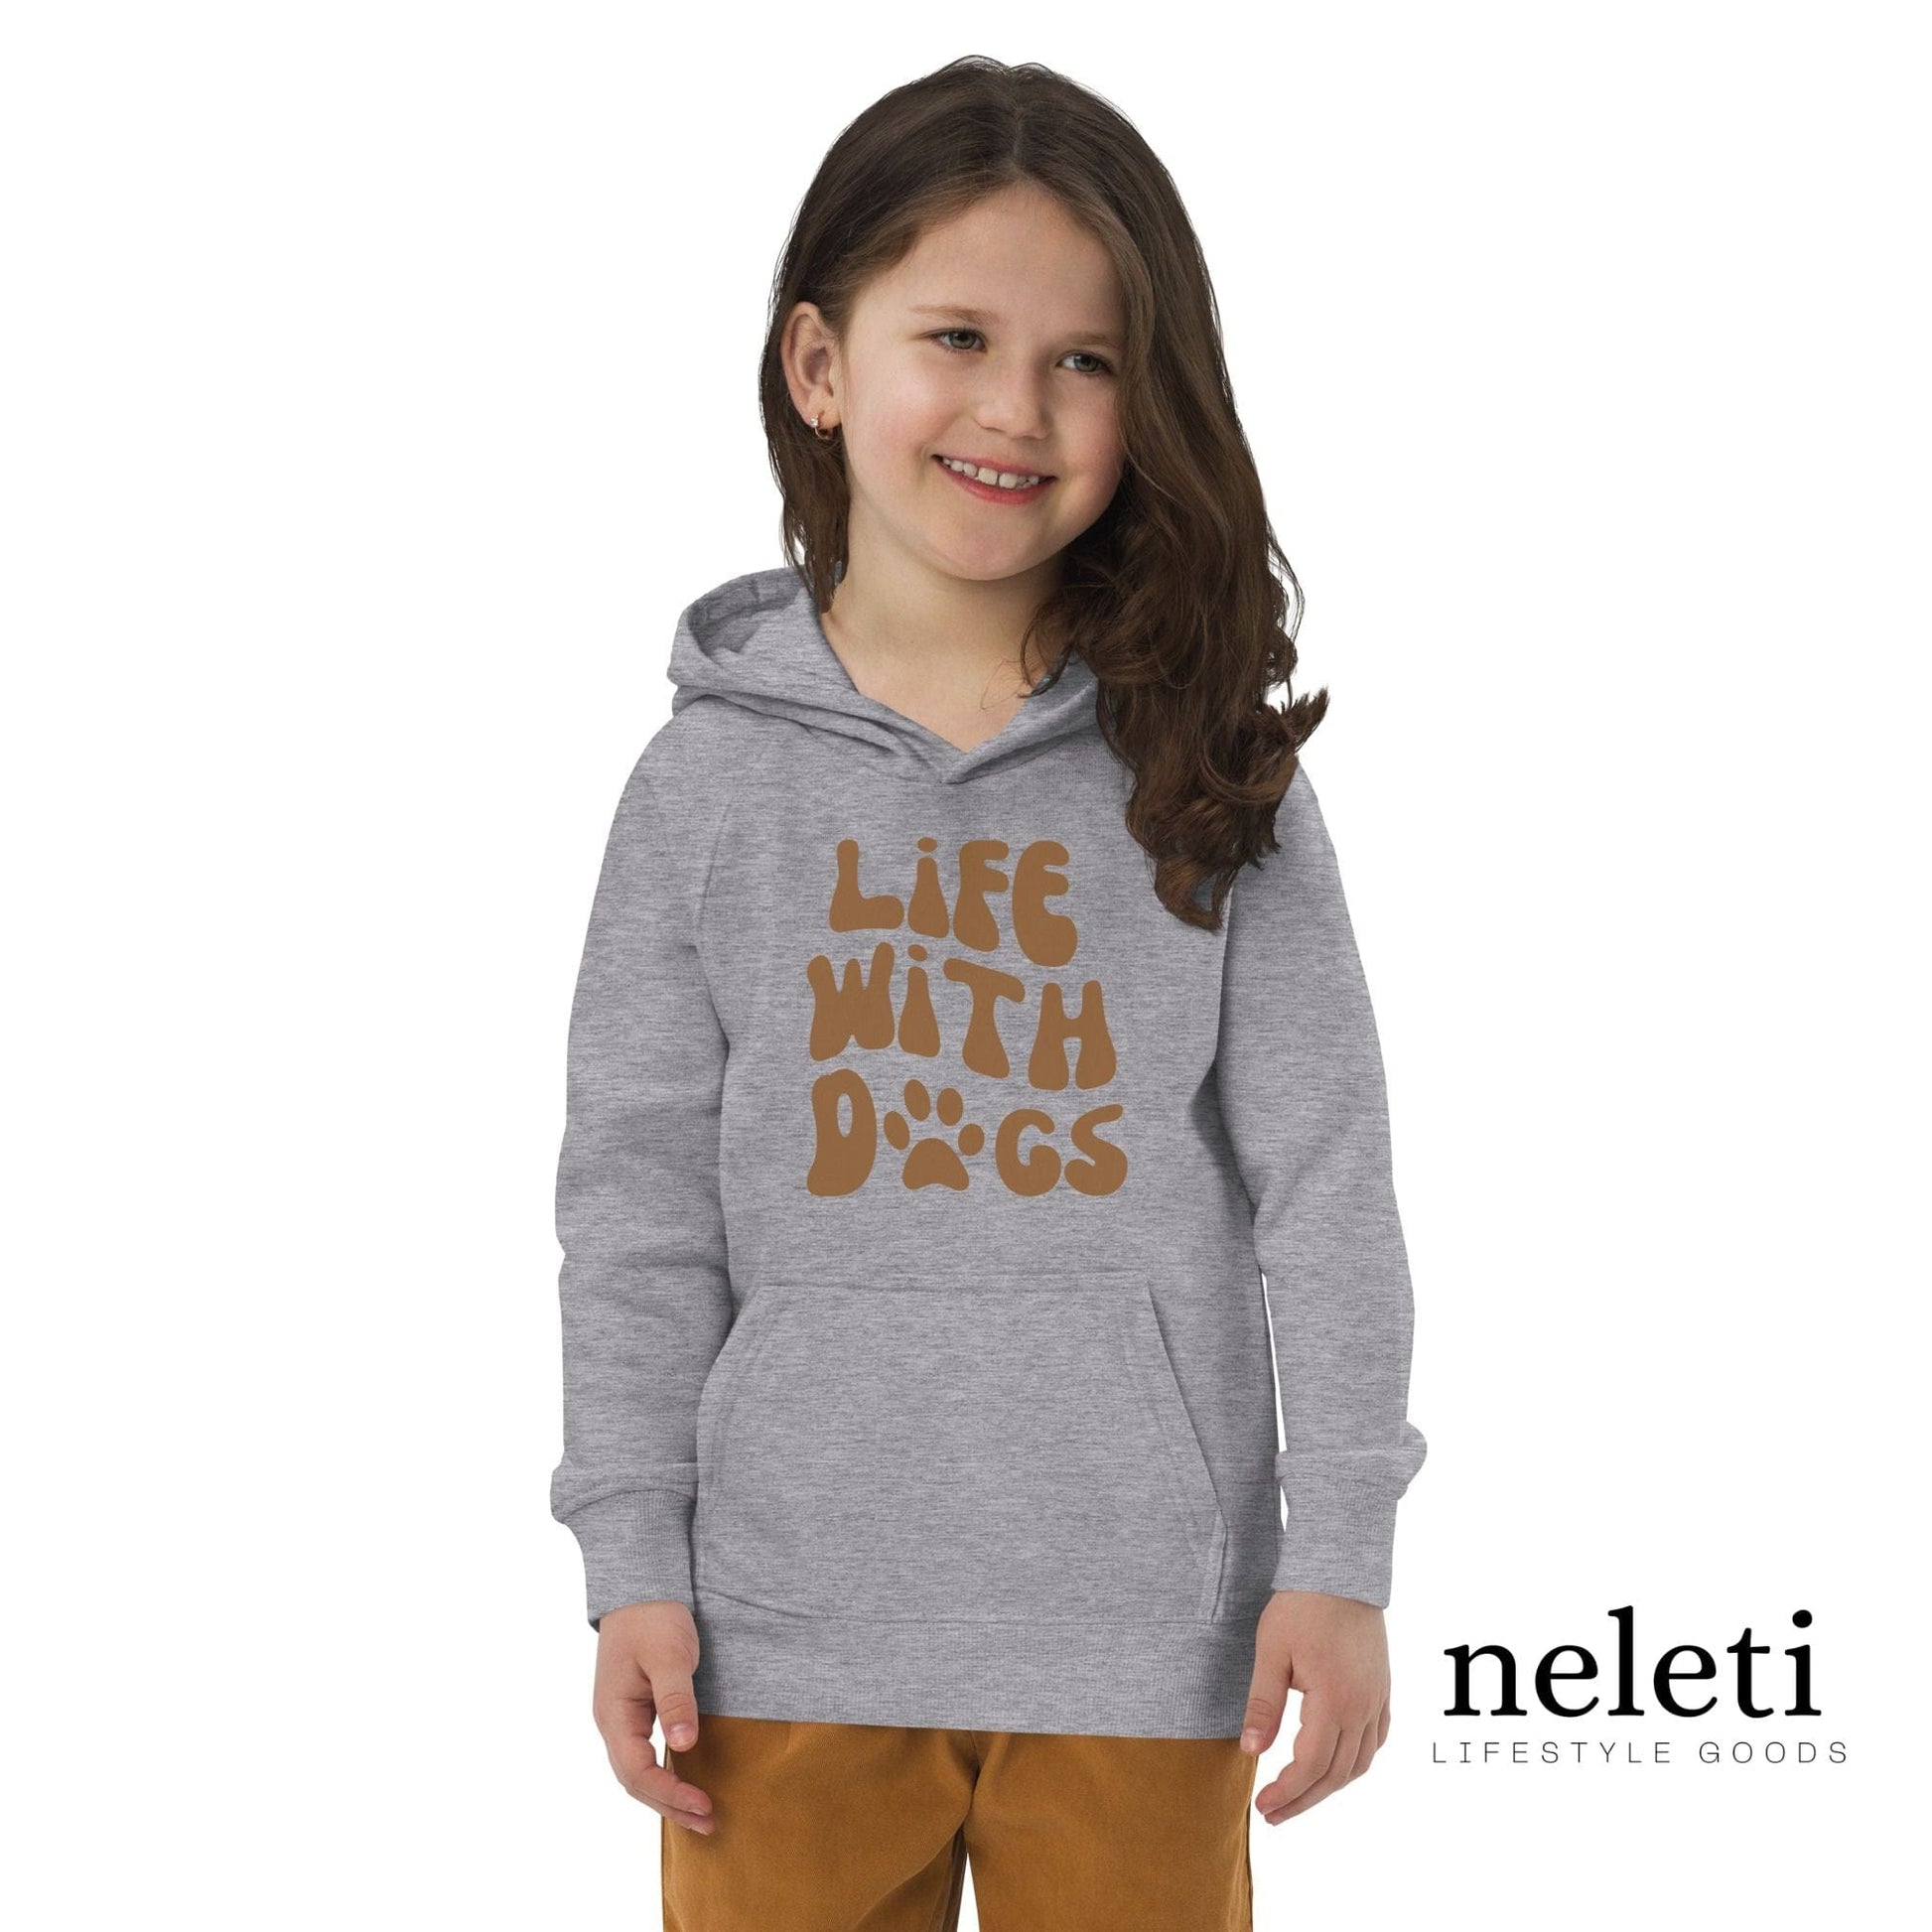 neleti.com-grey-kids-hoodies-with-puff-print